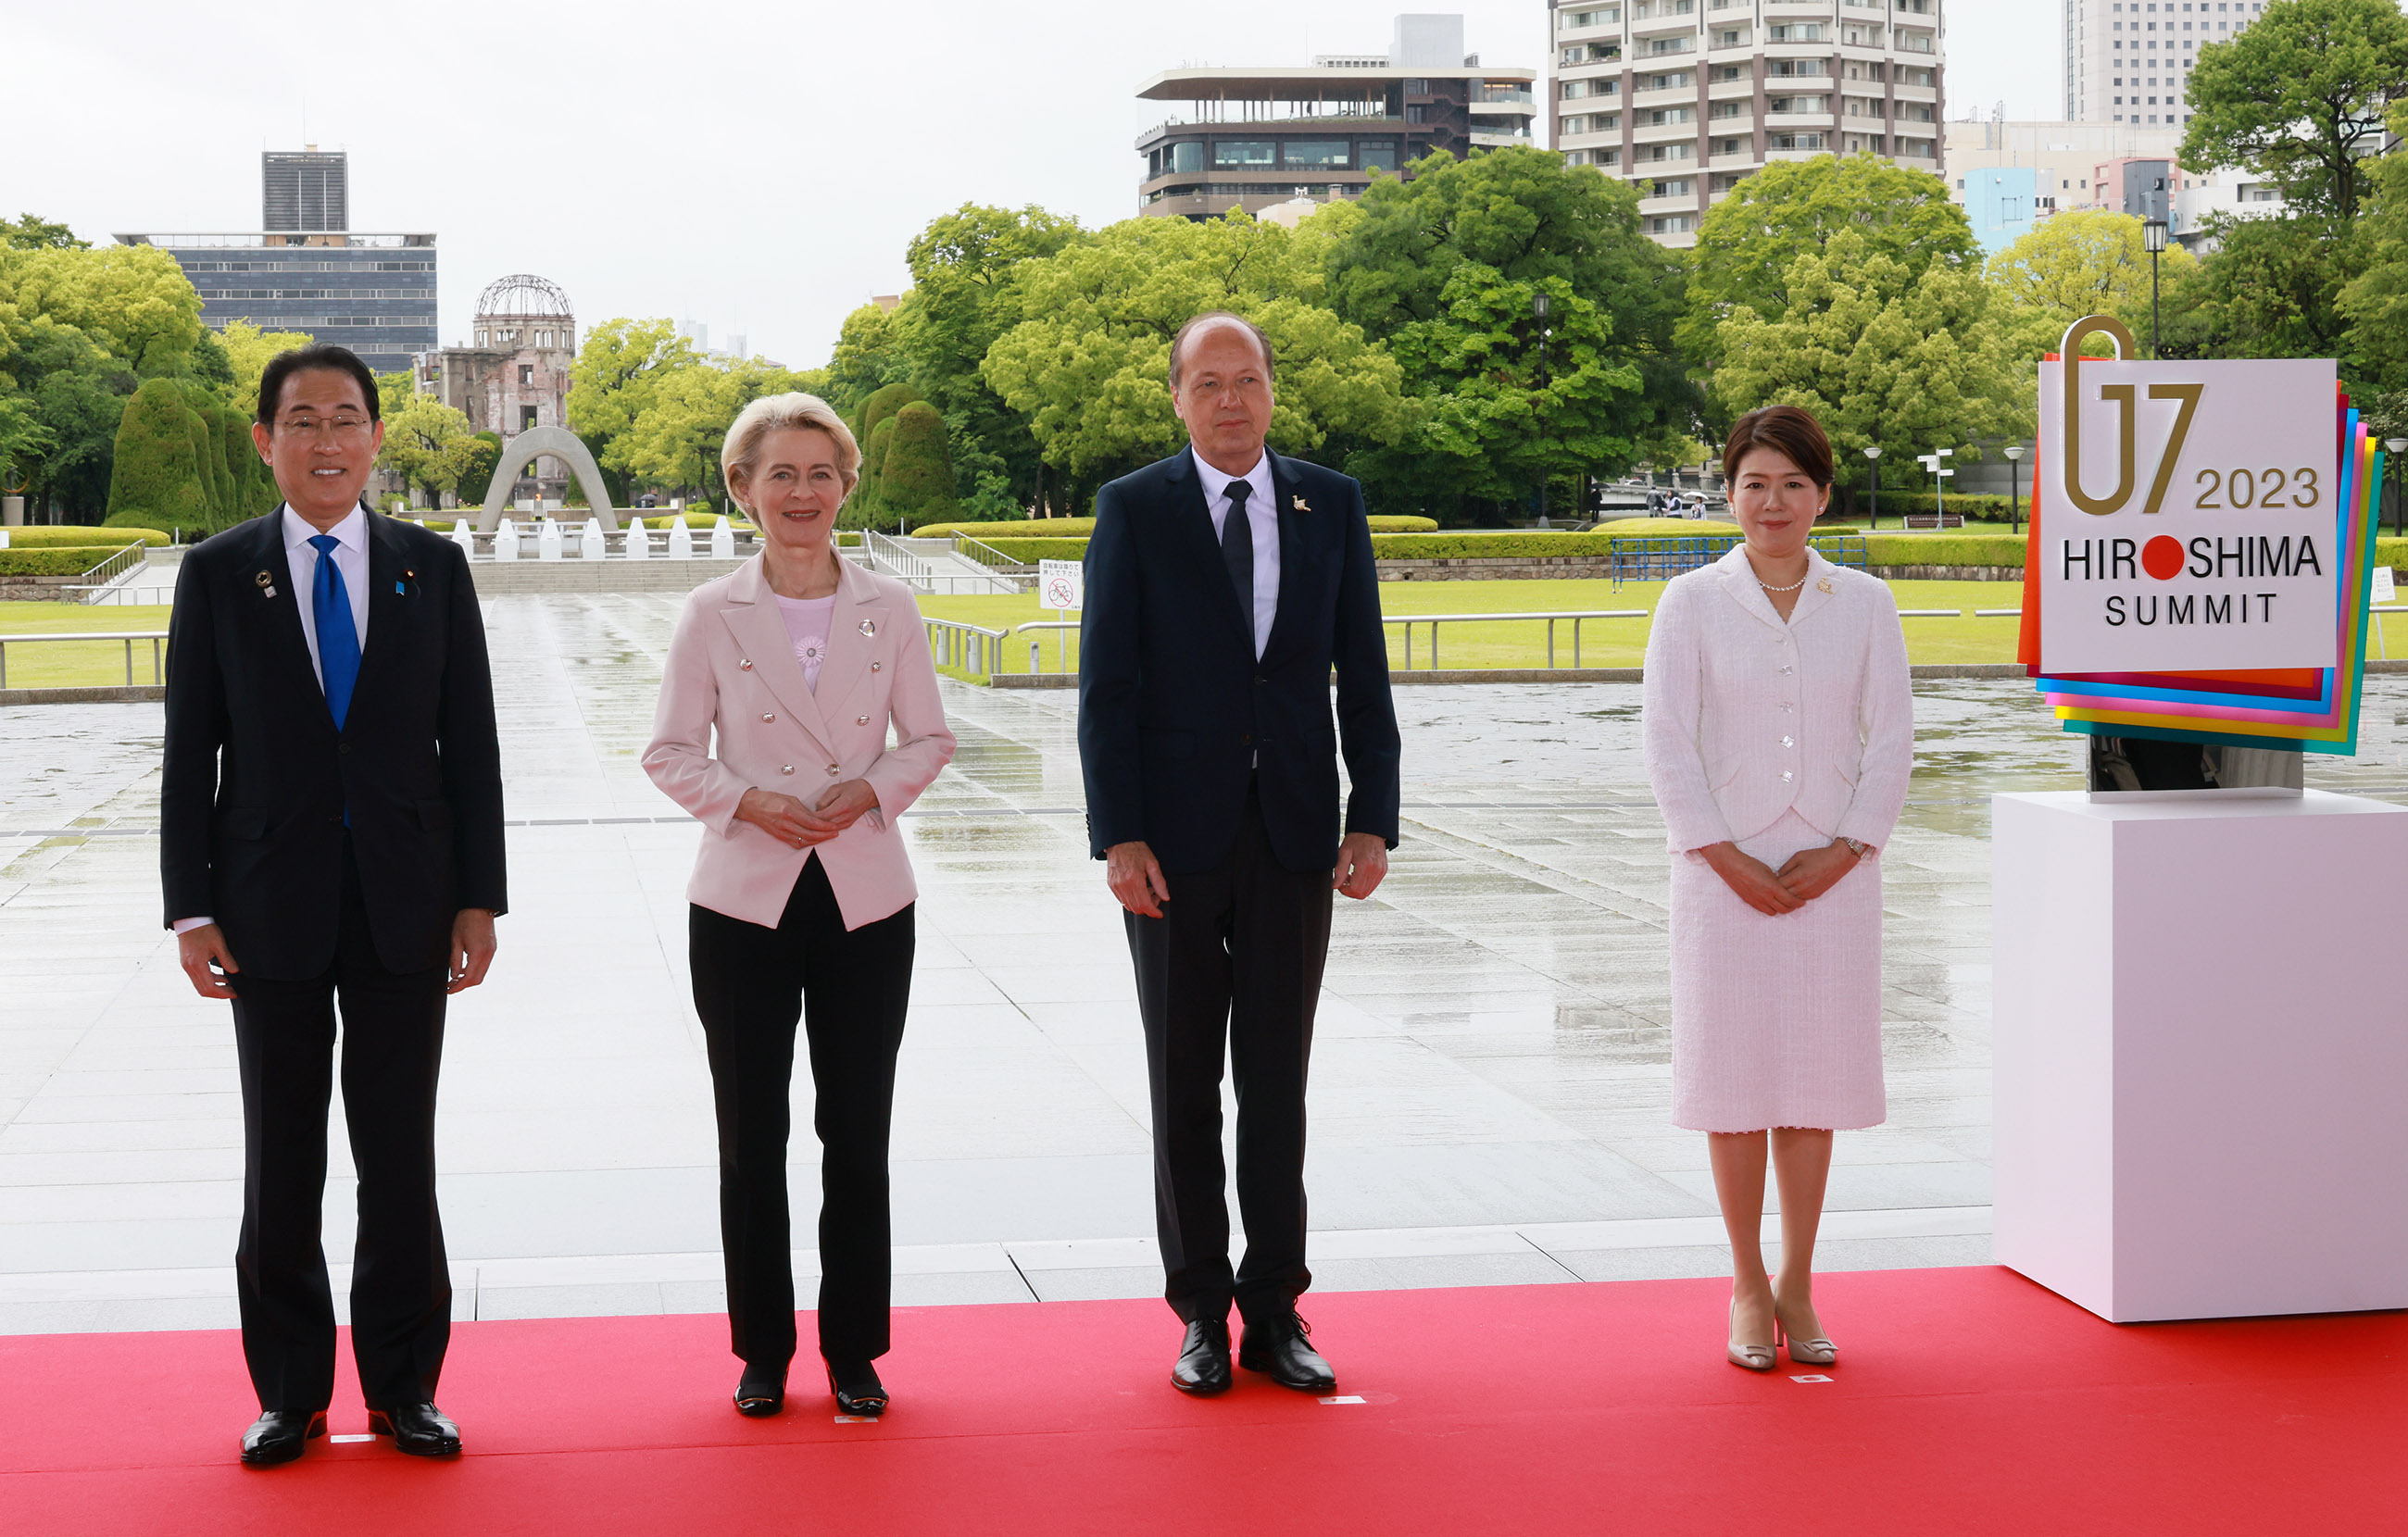 Prime Minister Kishida greeting the European Commission President Ursula von der Leyen and her spouse